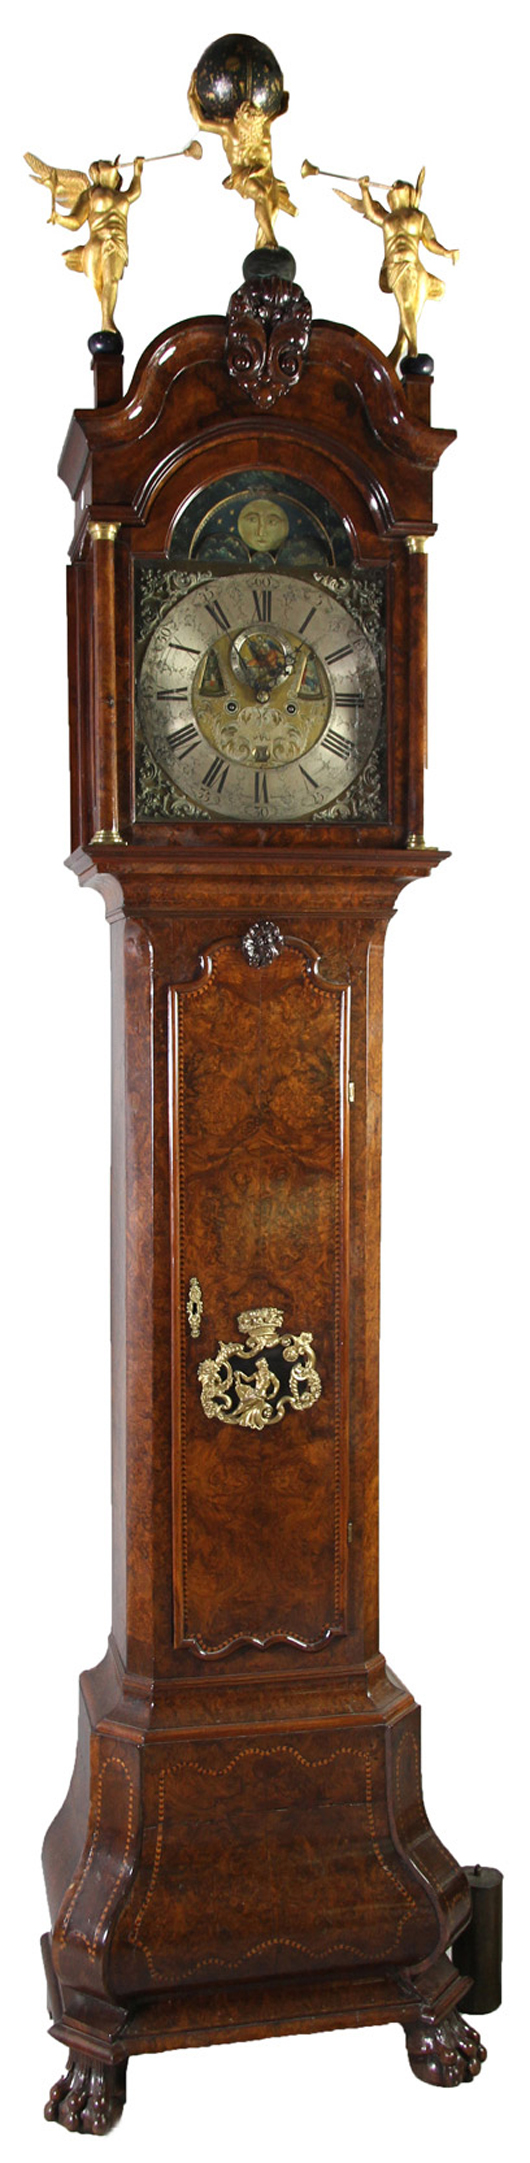 Eighteenth century Dutch tall-case clock, 8 feet high excluding finials. Estimate: $5,000-$10,000. Image courtesy Kaminski Auctions.